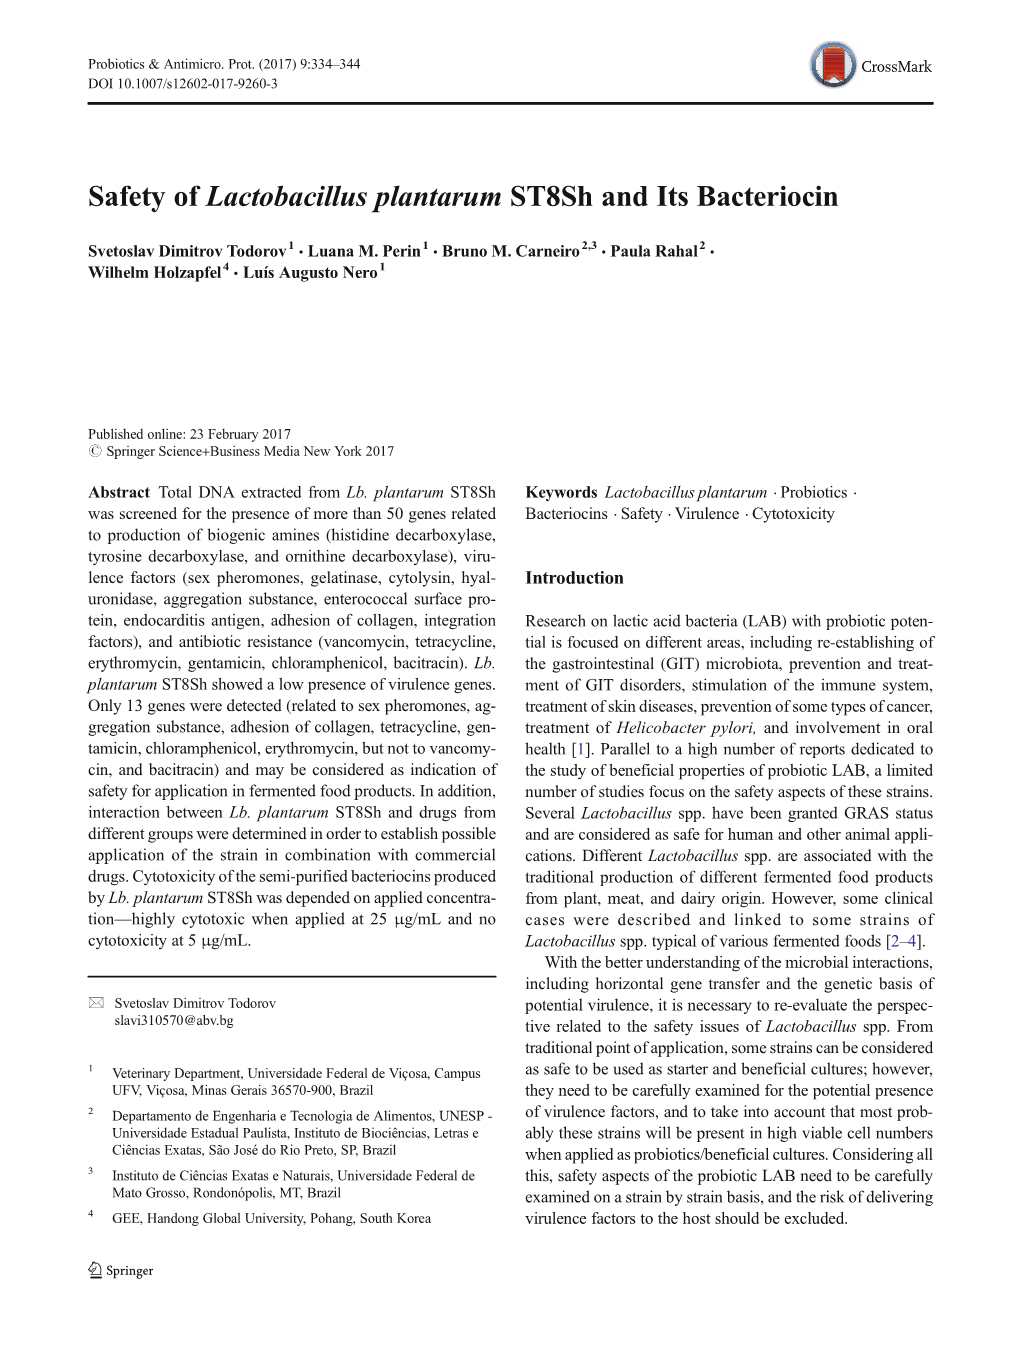 Safety of Lactobacillus Plantarum St8sh and Its Bacteriocin